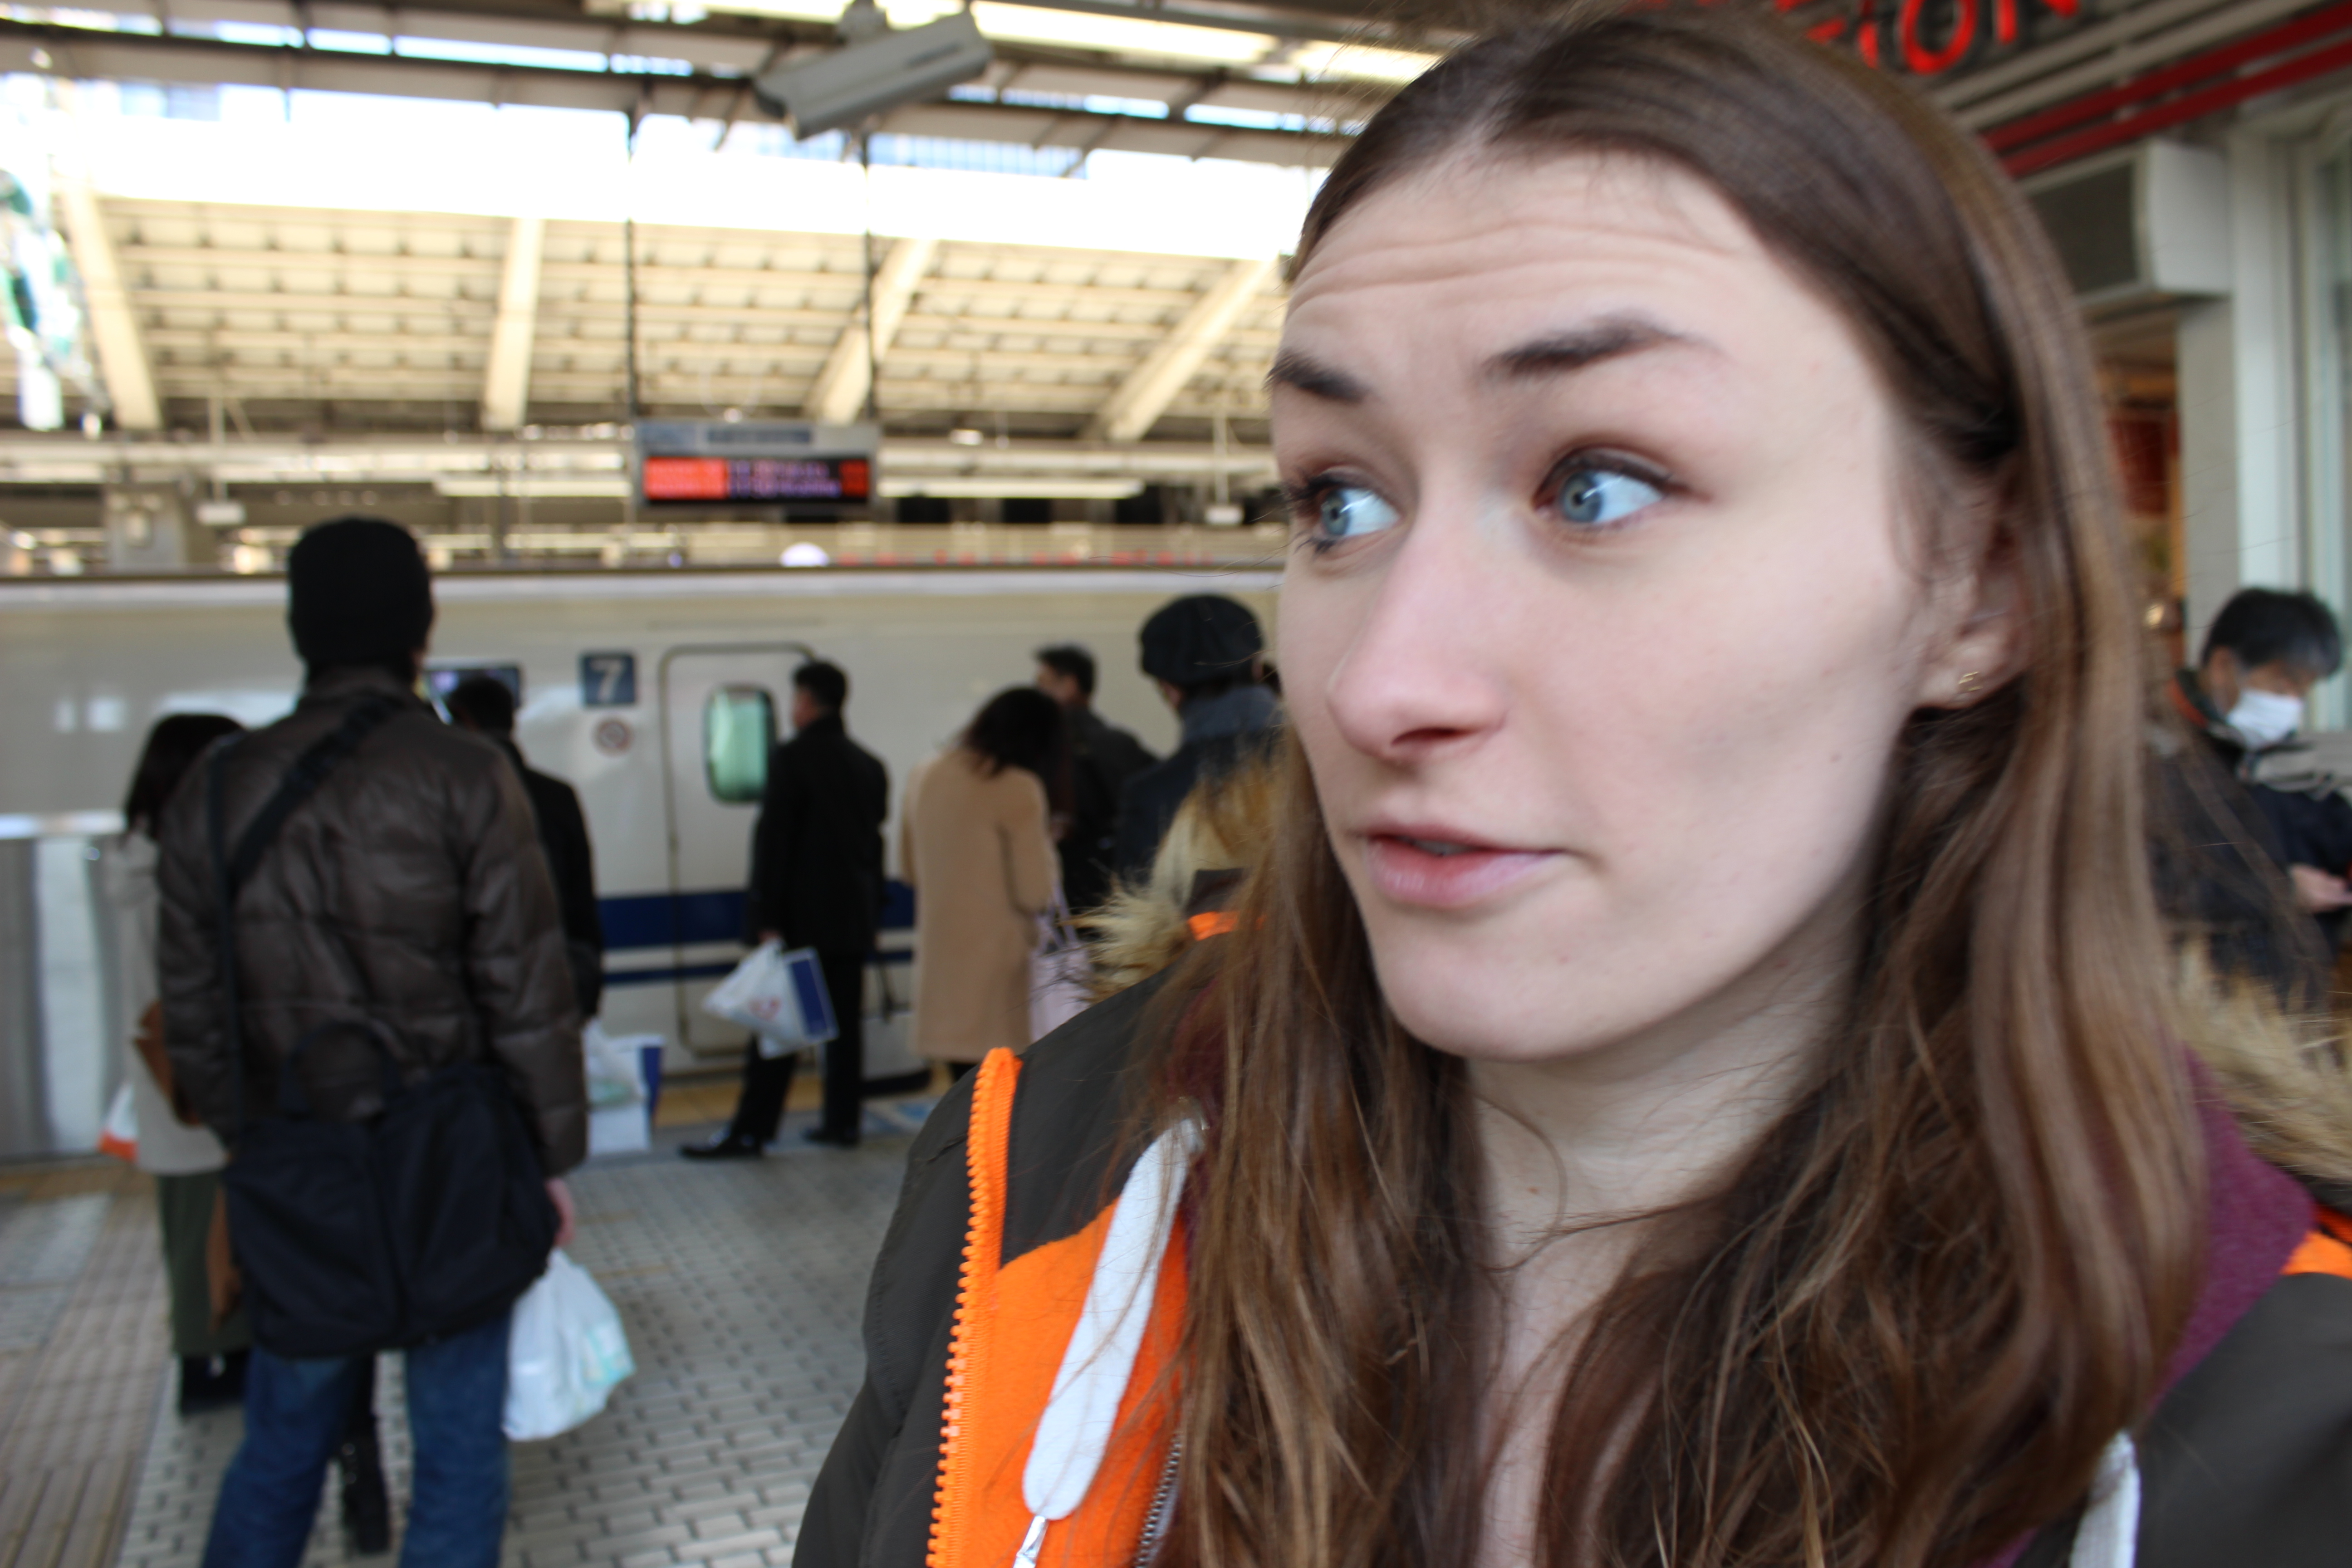 Waiting for the train and Sarah spots the Shinkansen